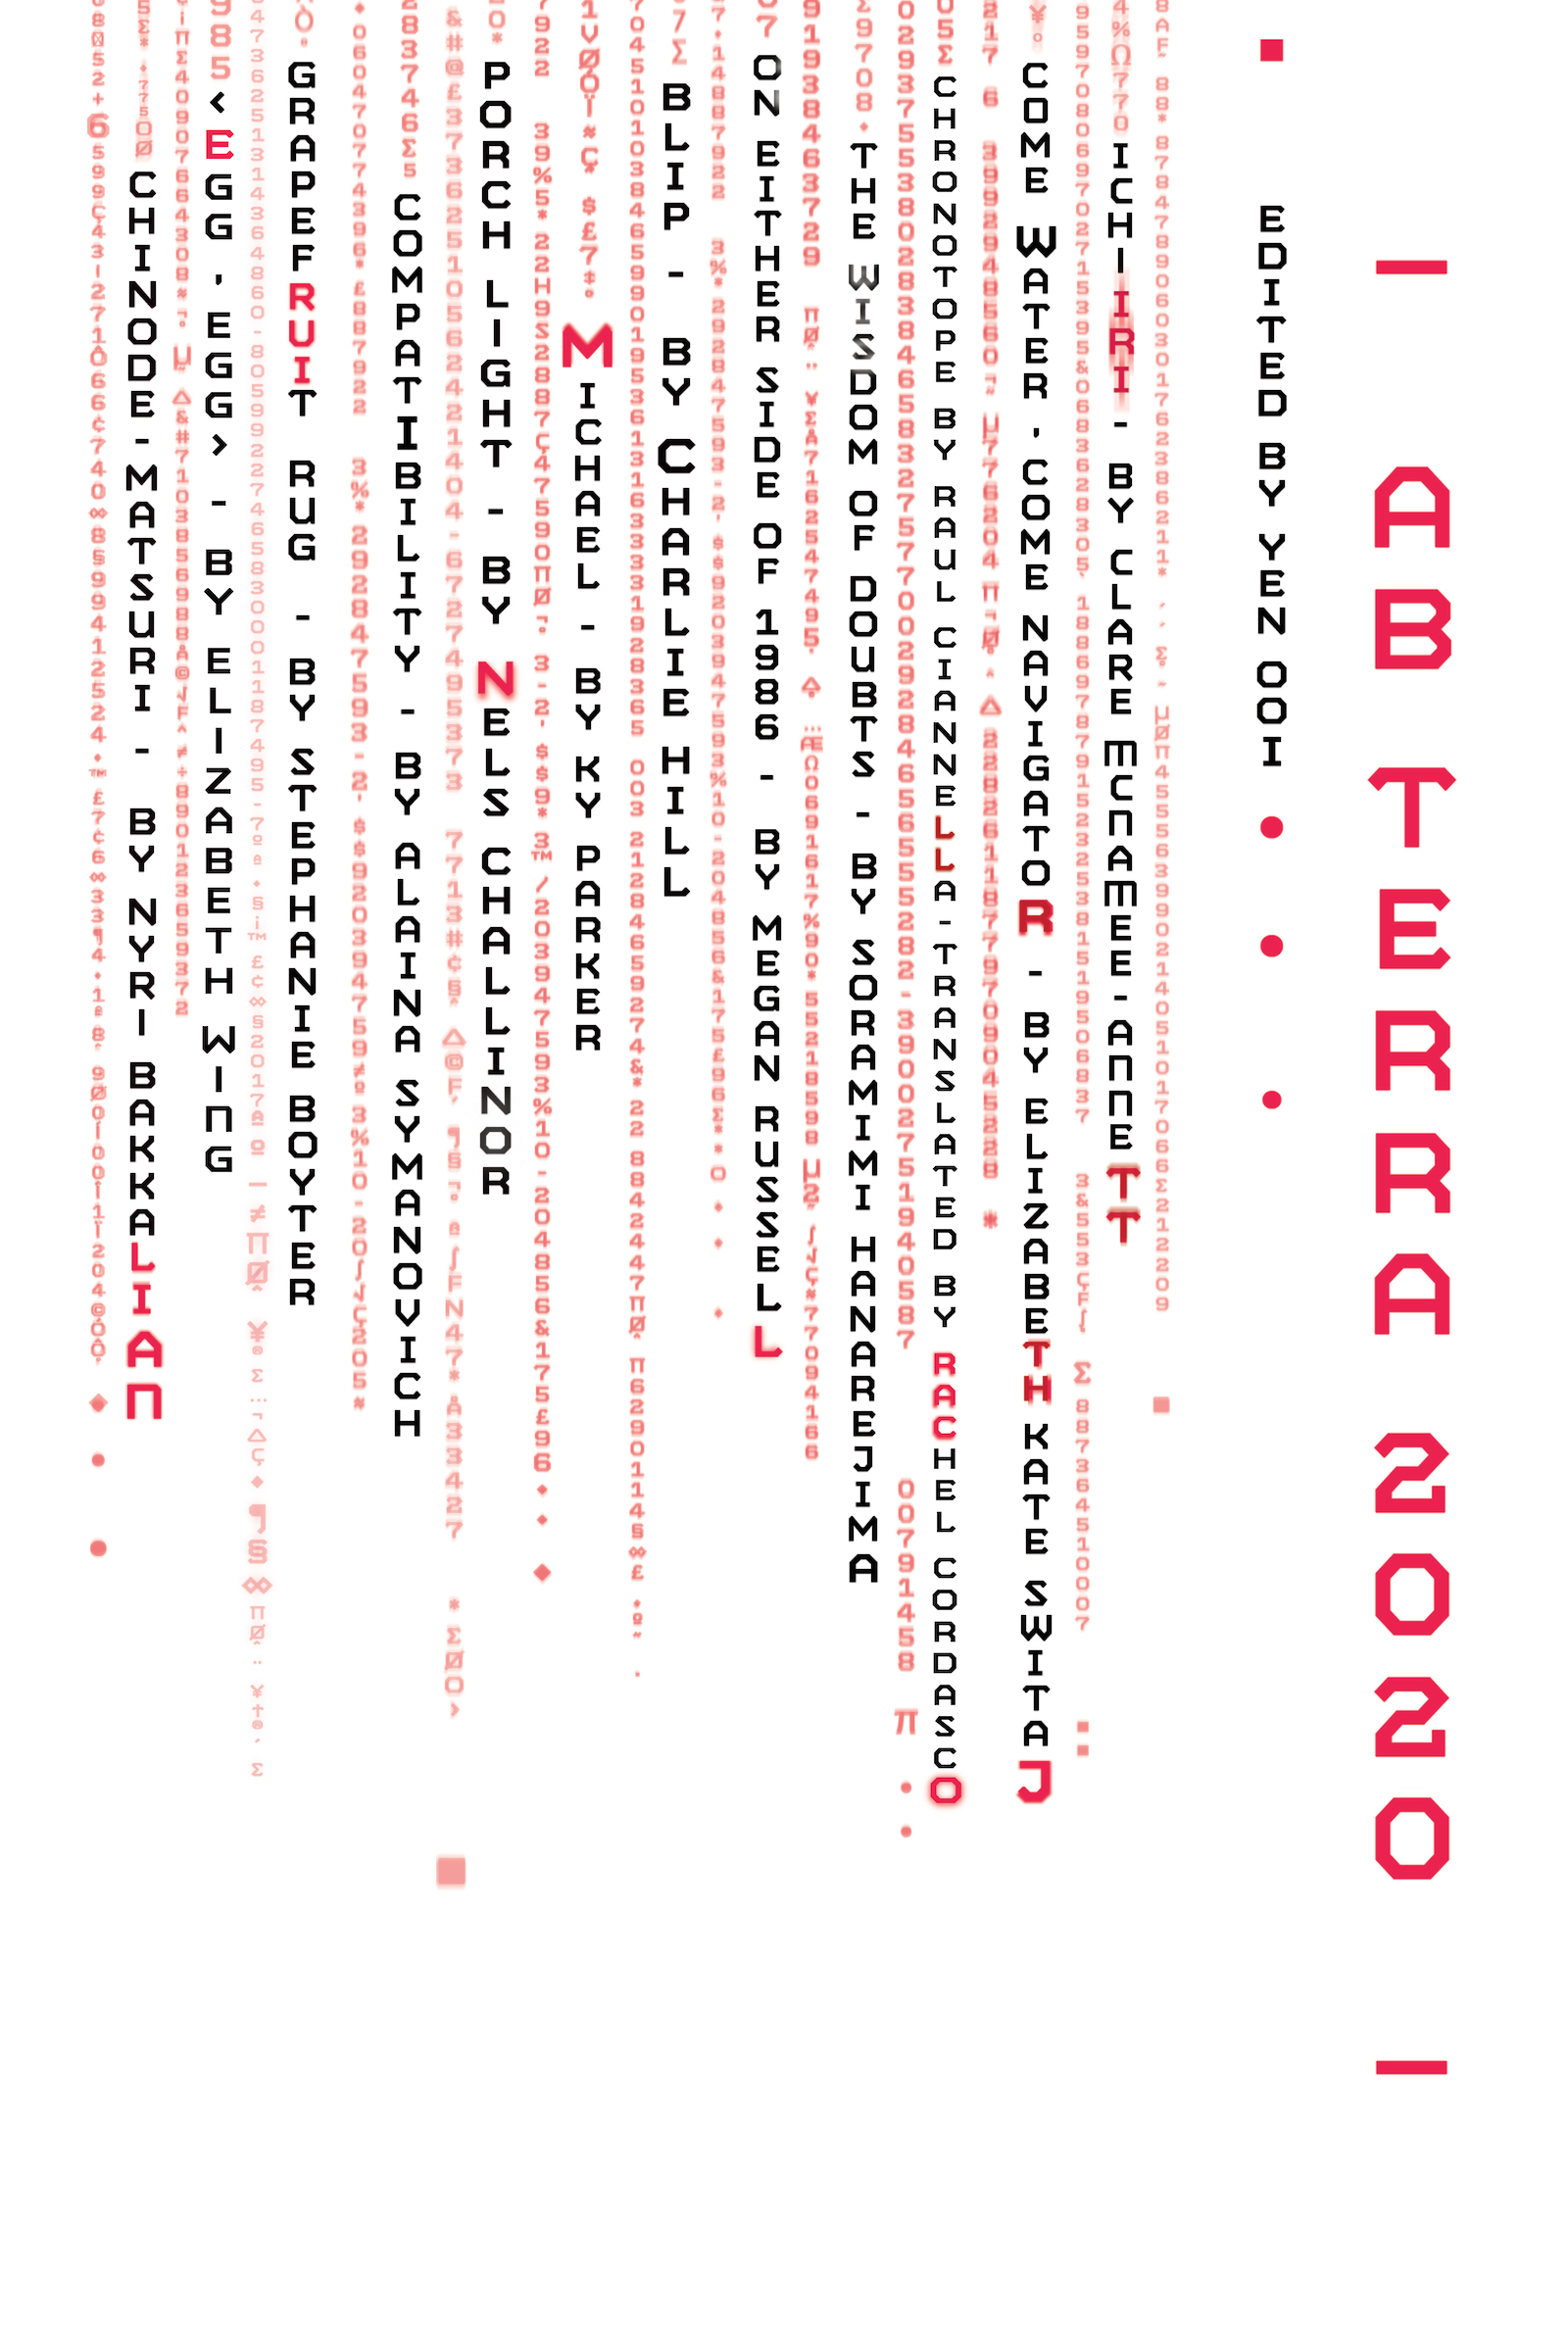 Ab Terra 2020 edited by Yen Ooi